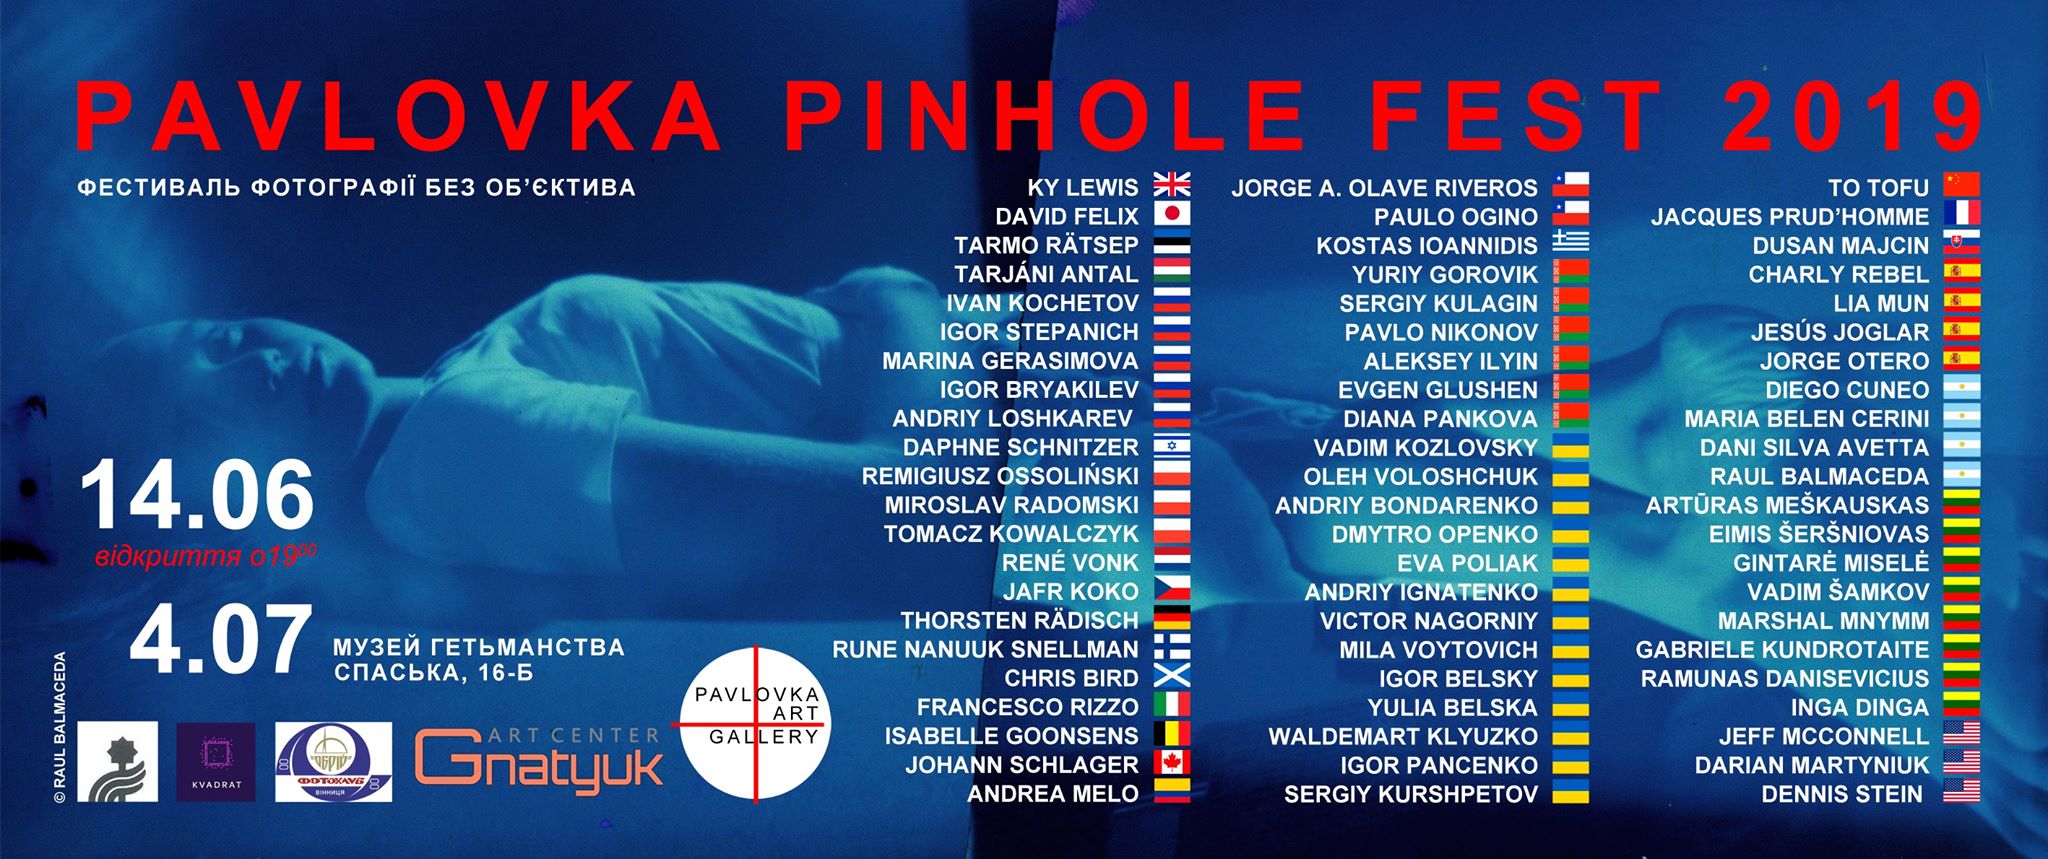 Pavlovka Pinhole Fest 2019, фото-1